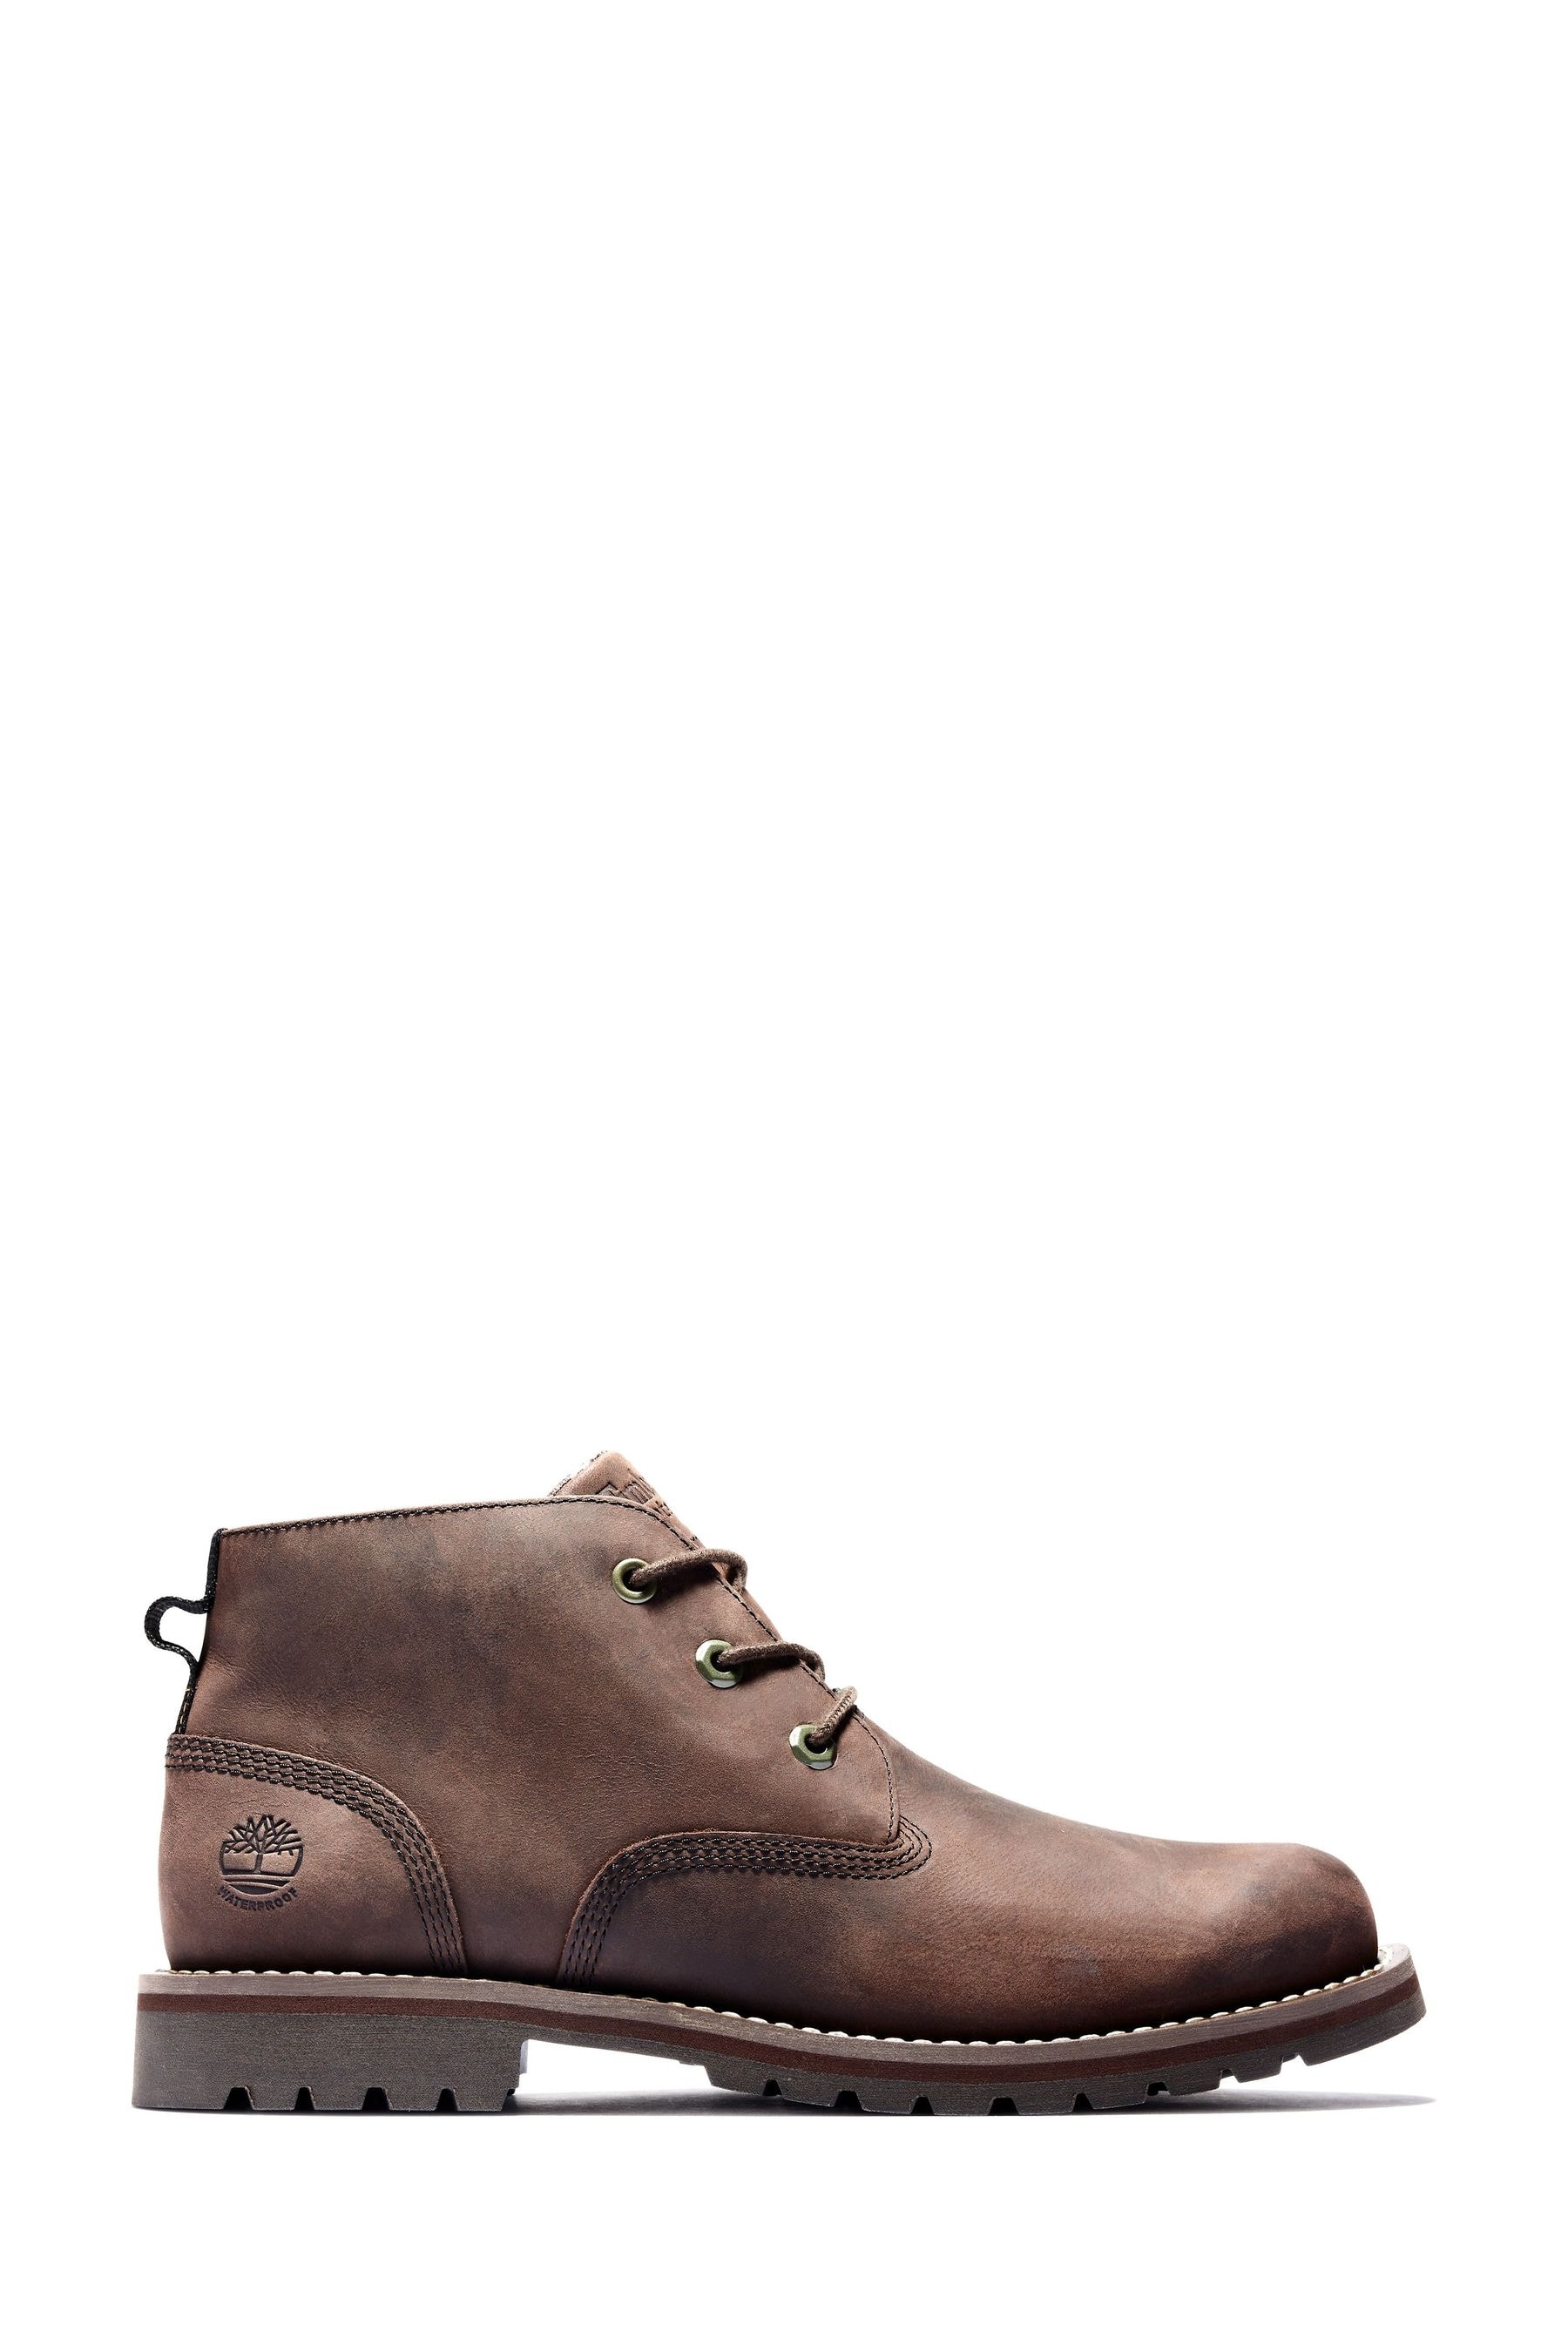 Кожаные водонепроницаемые ботинки чукка Larchmont II Timberland, коричневый ботинки чукка bradstreet timberland коричневый